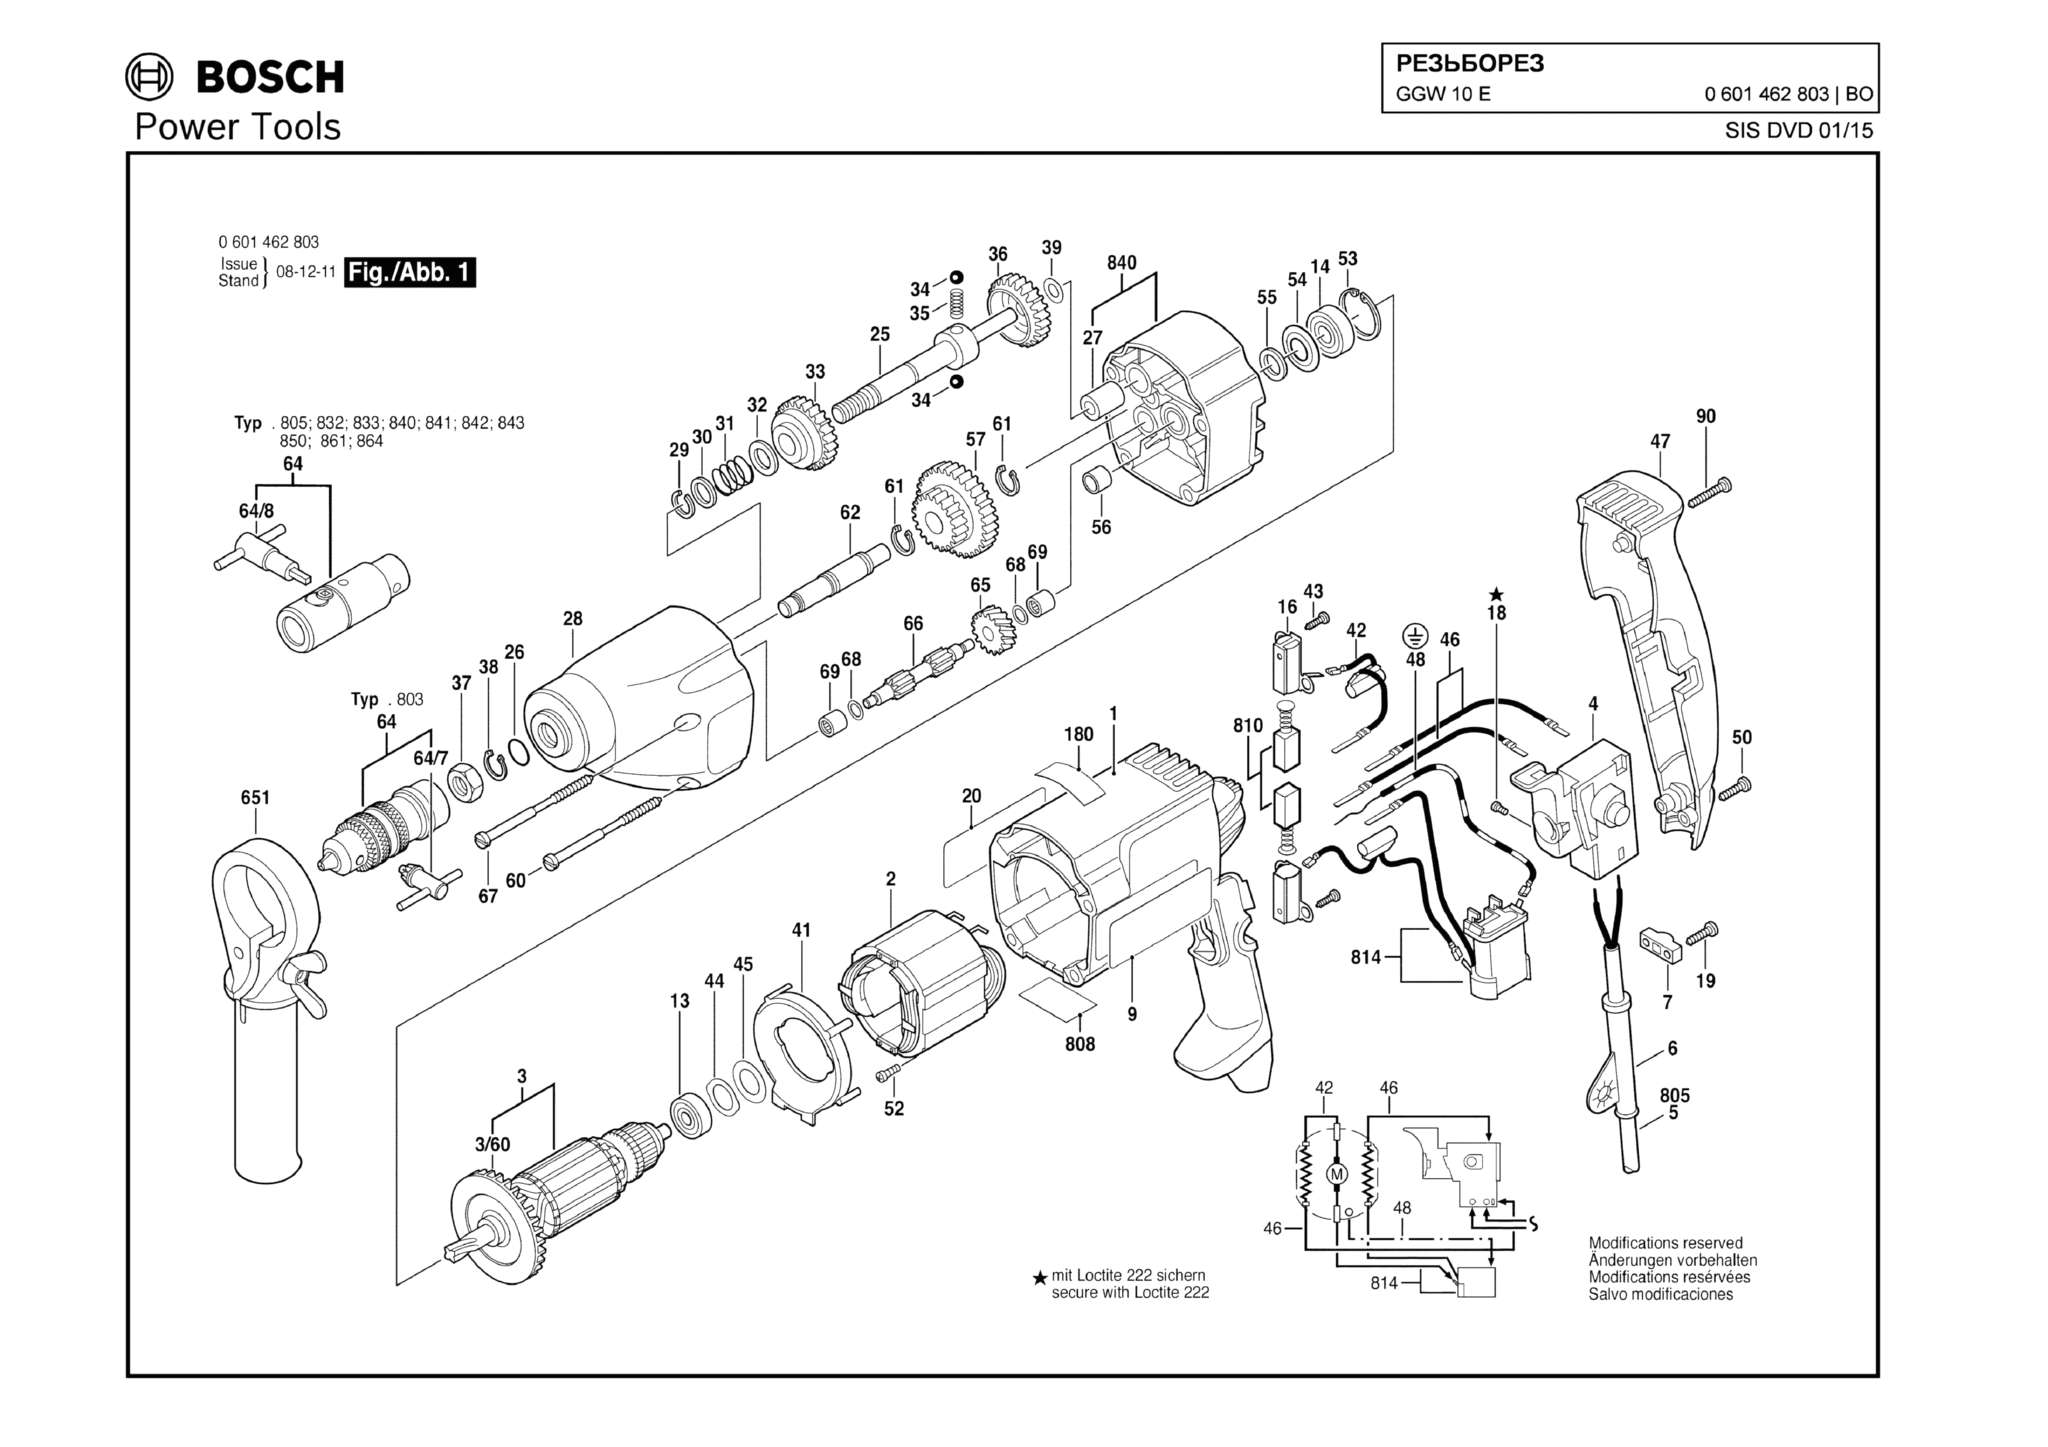 Запчасти, схема и деталировка Bosch GGW 10 E (ТИП 0601462803)